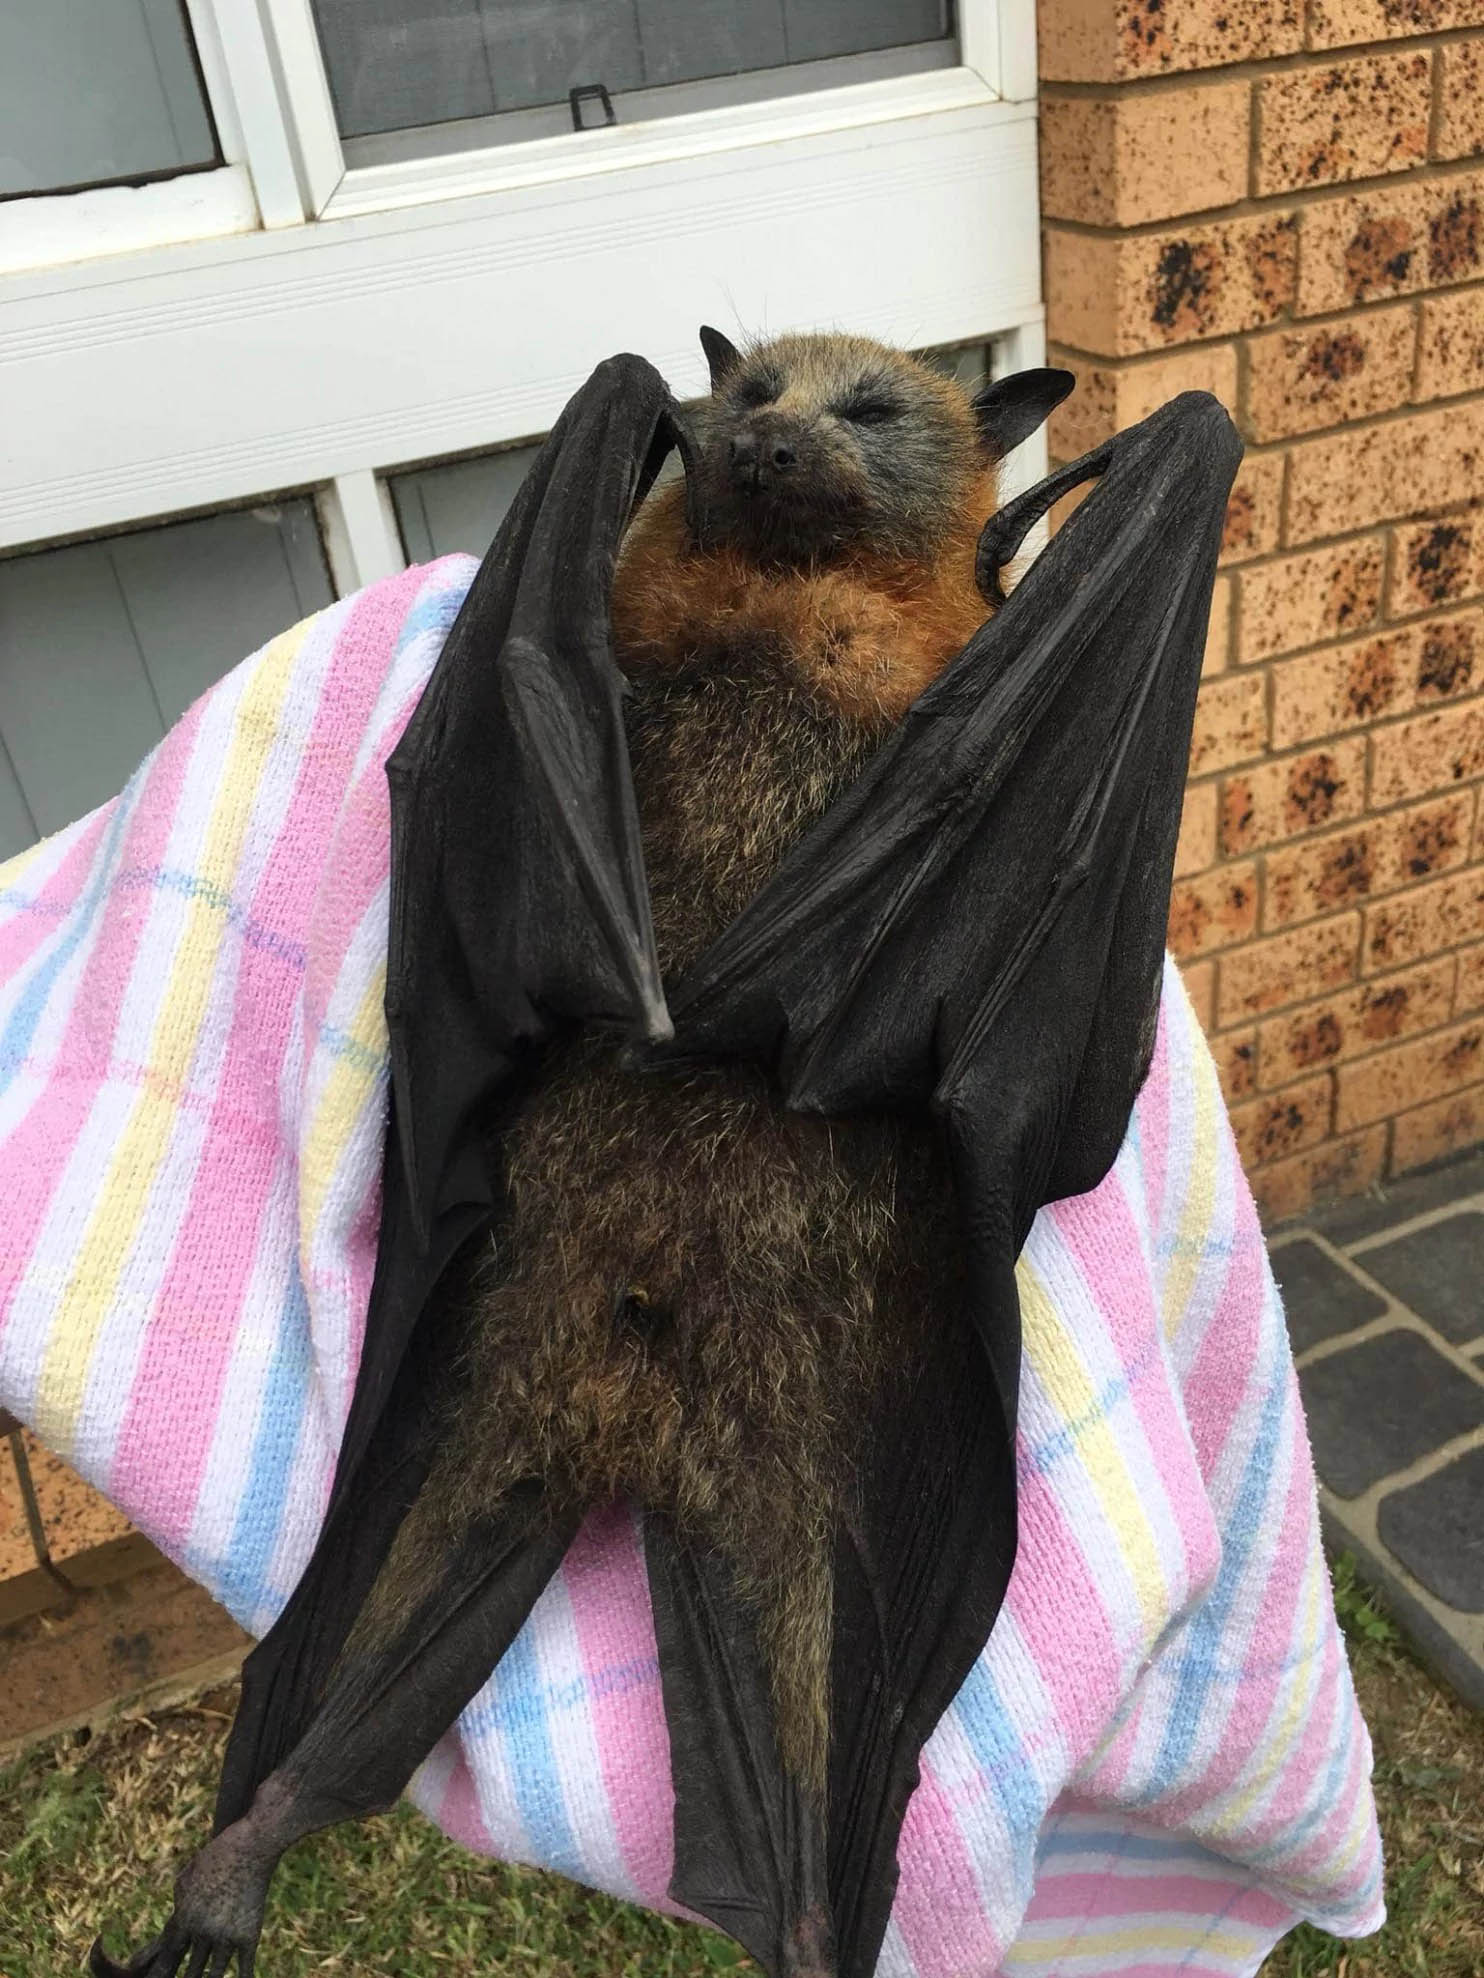 rescued baby bat